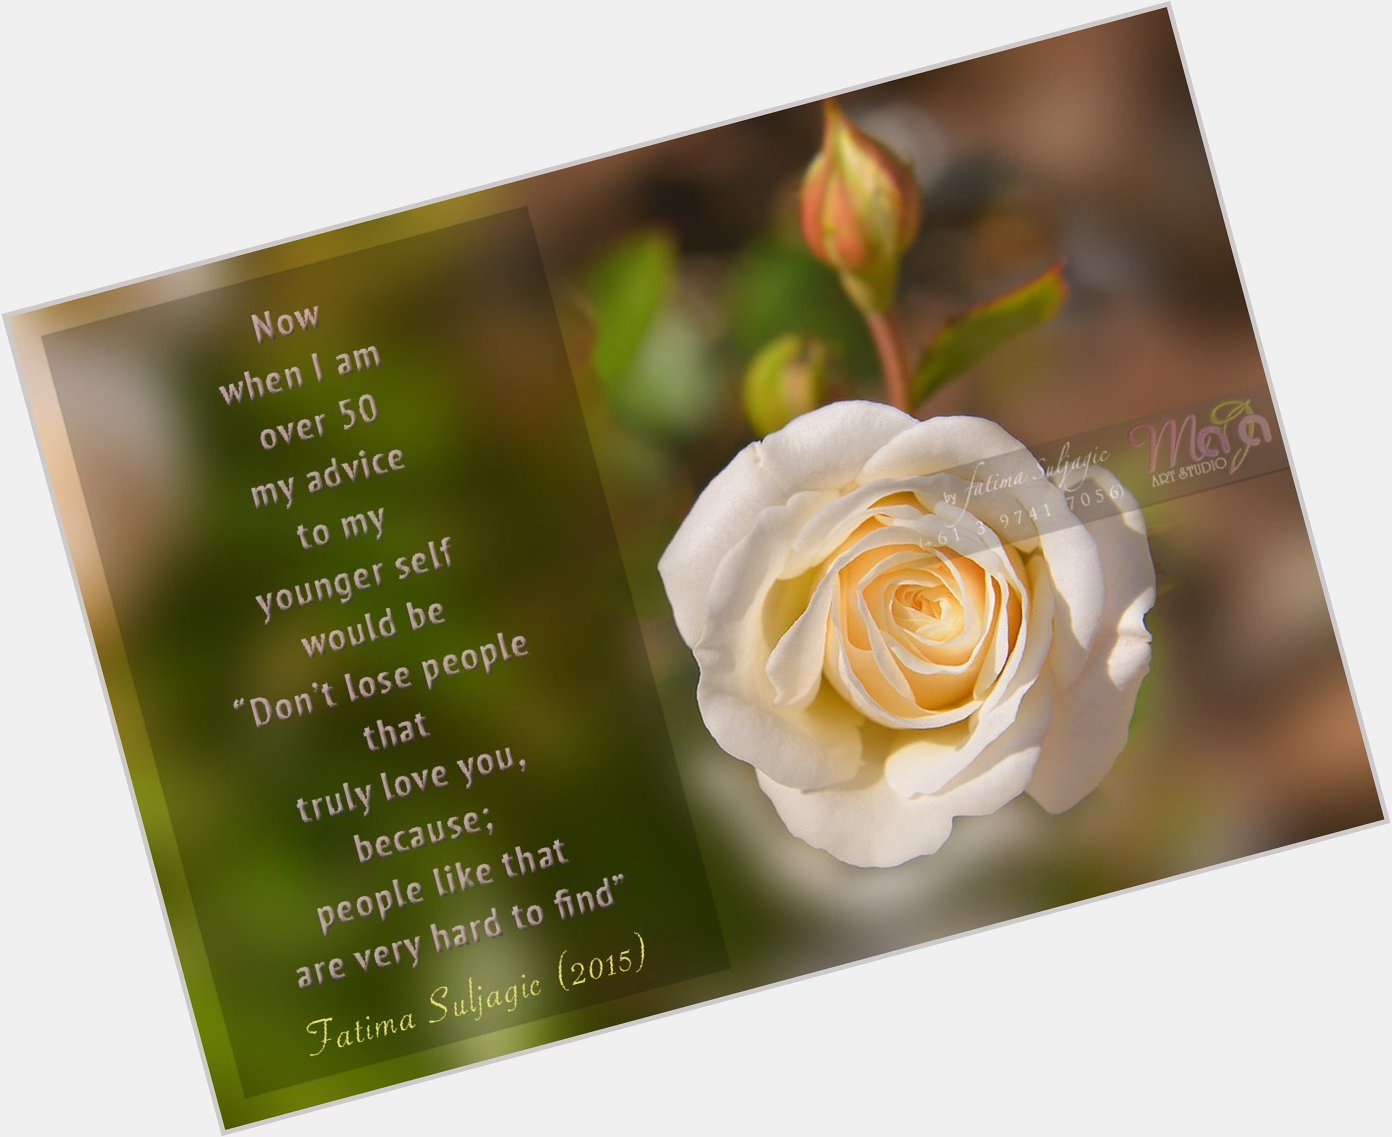 Birthday Cards by Fatima Suljagic

Happy Birthday Josh Duhamel,
may God bless you with true happiness! 